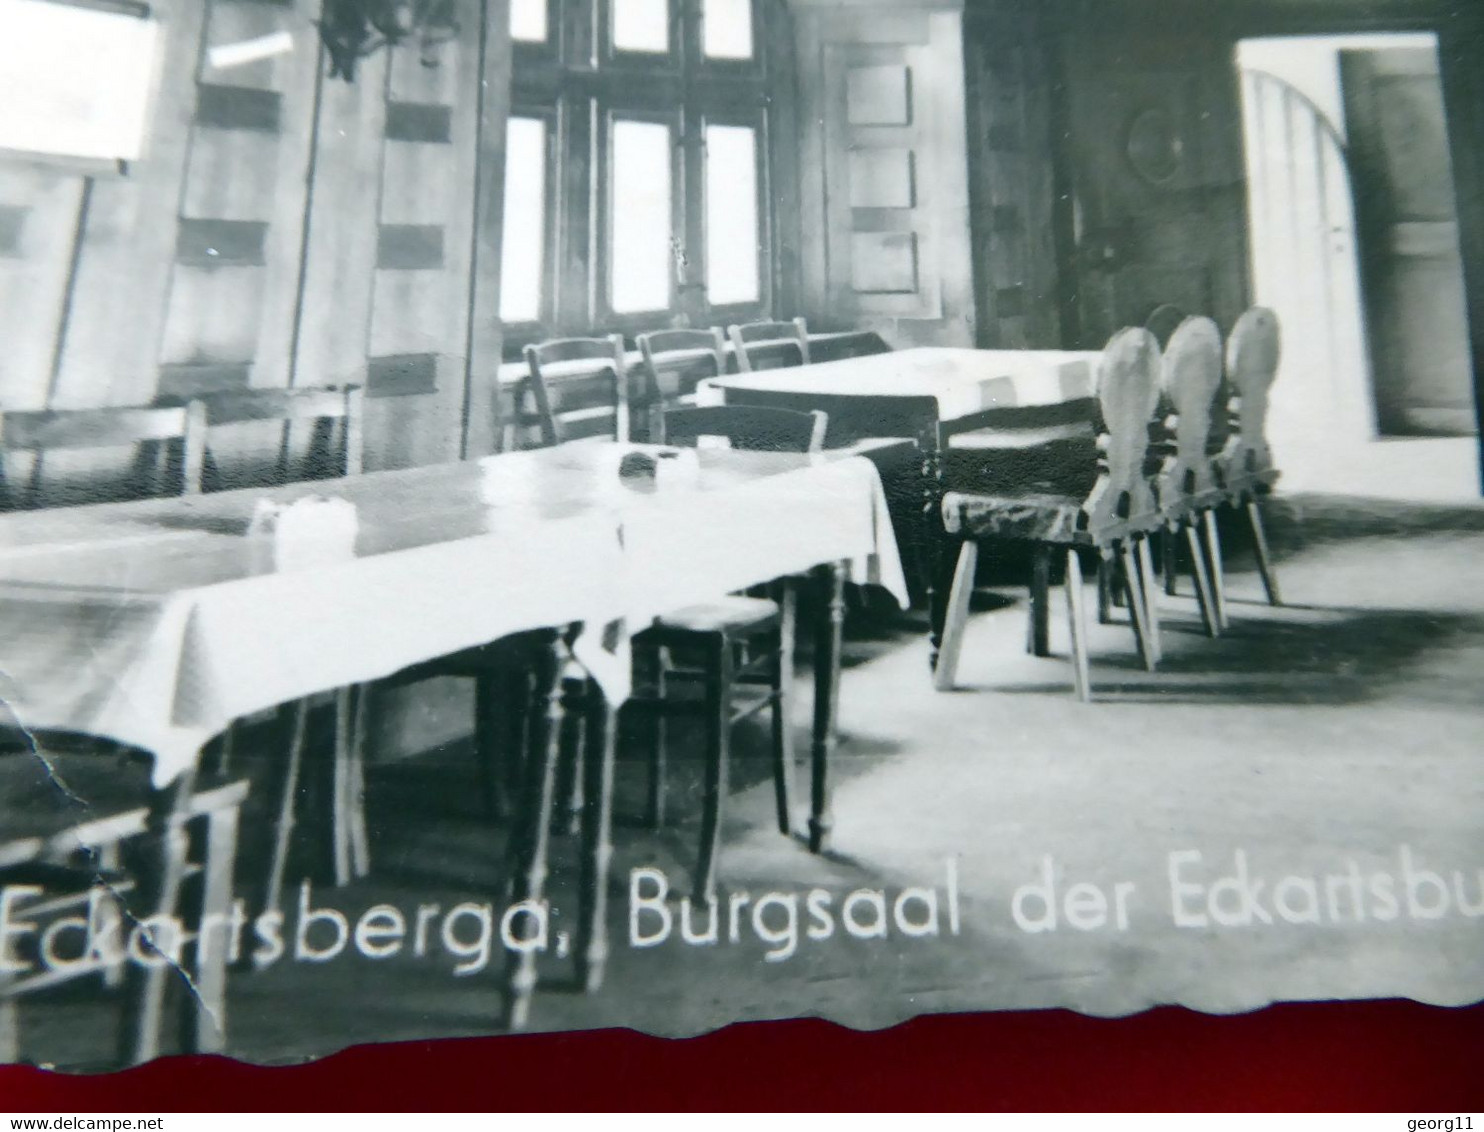 Eckartsberga - Burgsaal Eckartsburg - Echt Foto 1960 - Sachsen-Anhalt - Burgenland - Geweihe - Burgenland